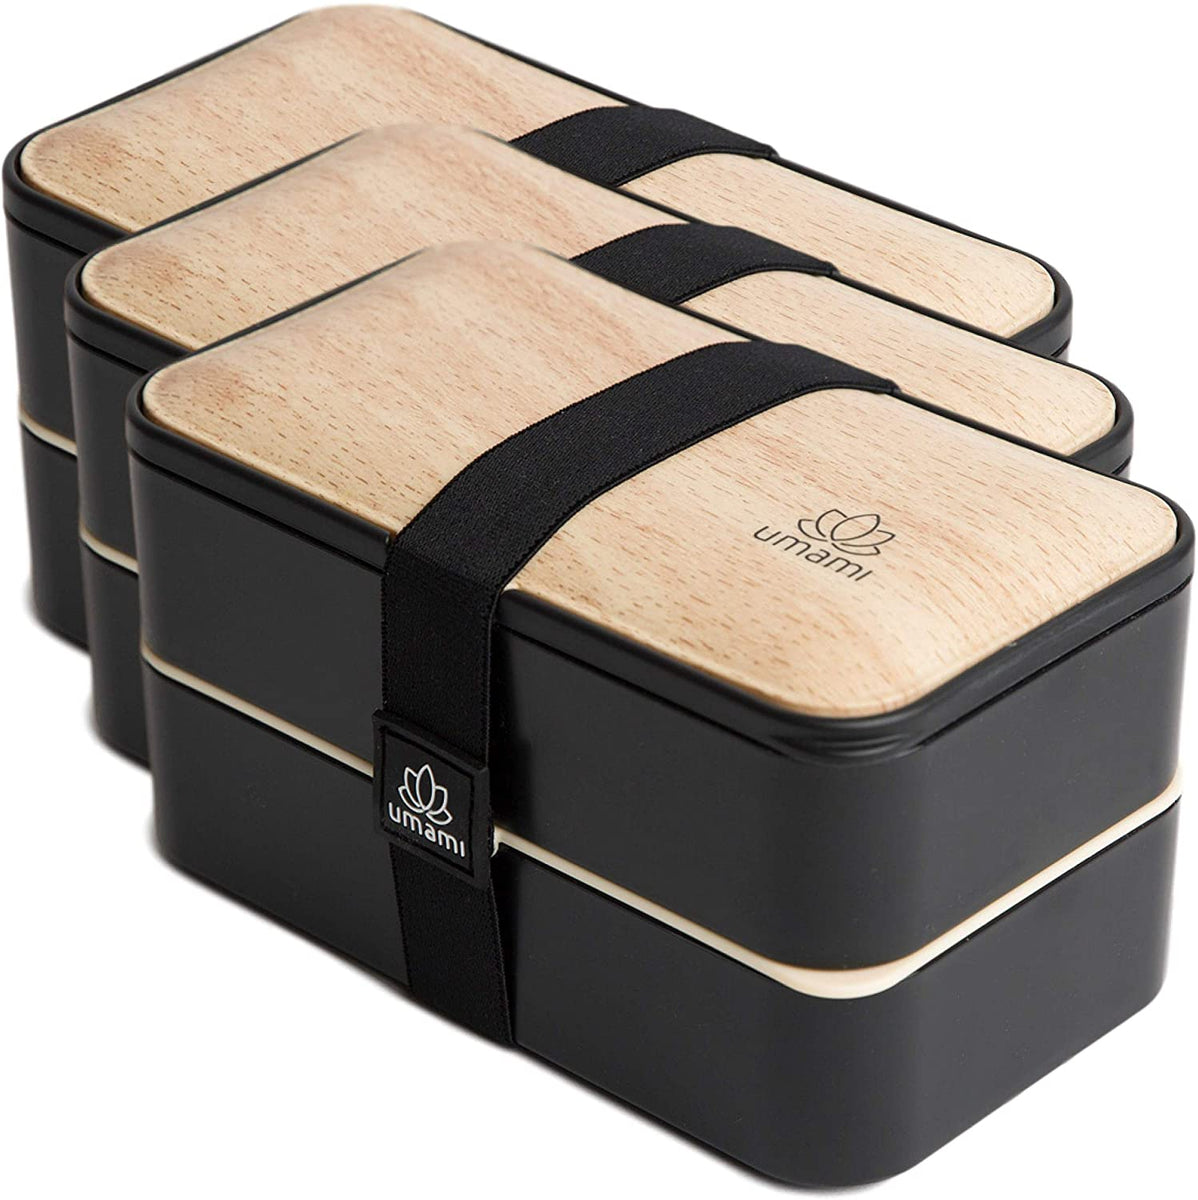 Bento Tek 3 oz Black Buddha Box Snack / Sauce Container - with Beige Lid -  3 3/4 x 2 1/4 x 1 1/4 - 4 count box